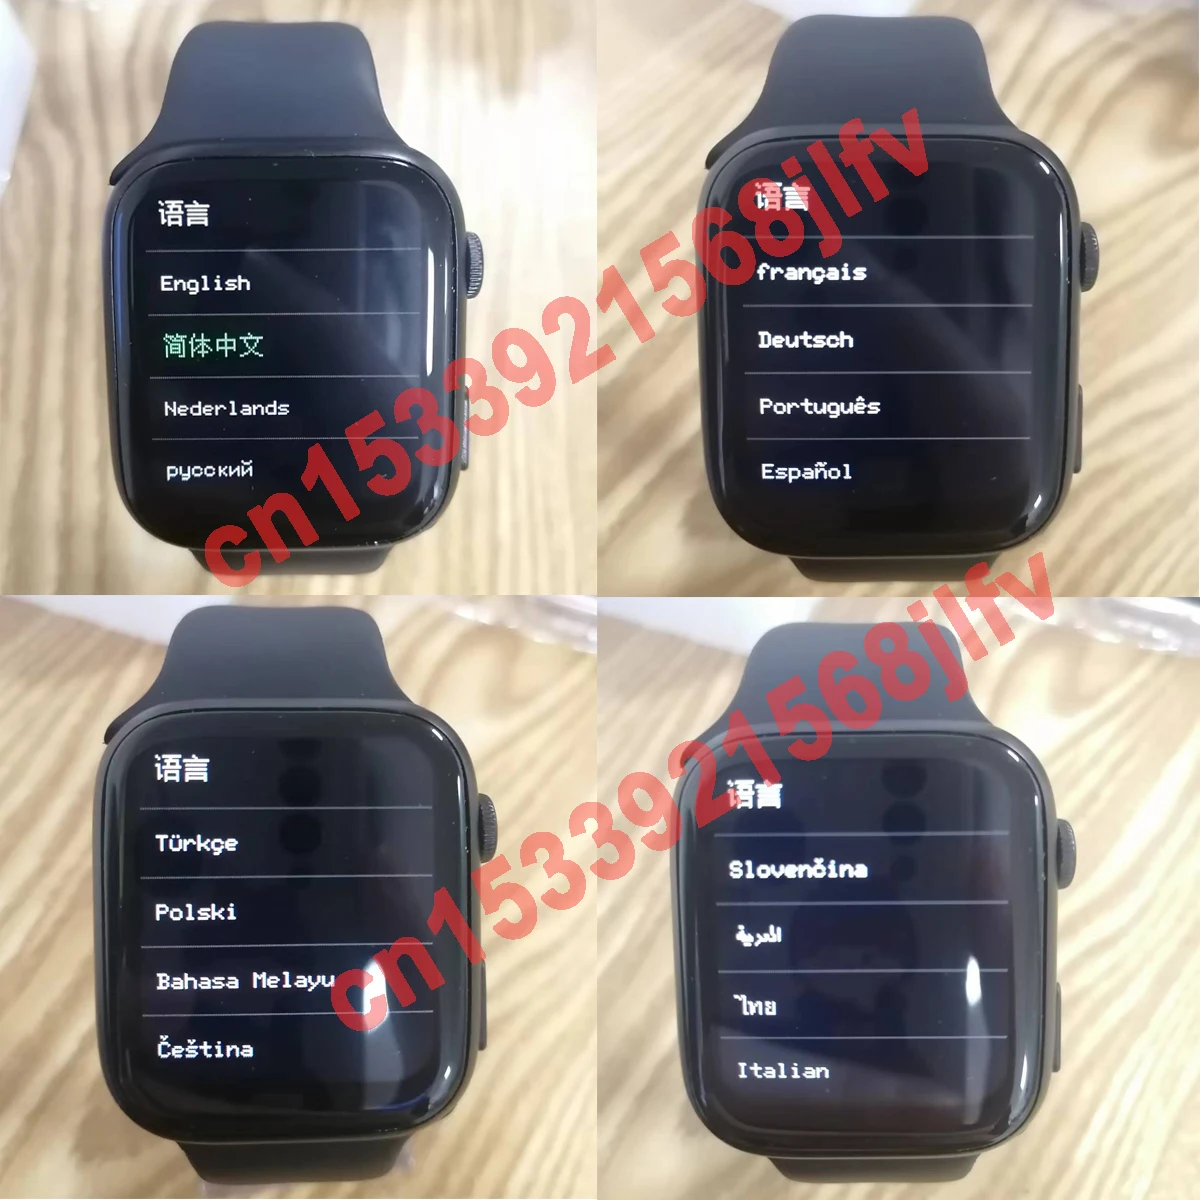 Nuovo IWO 14 Pro Max Series 7 i7 Pro Max Smartwatch Bluetooth Fitness  Tracker Smart Watch PK W27Pro X8 Max HW7 Max T500 Smartwatch _ - AliExpress  Mobile